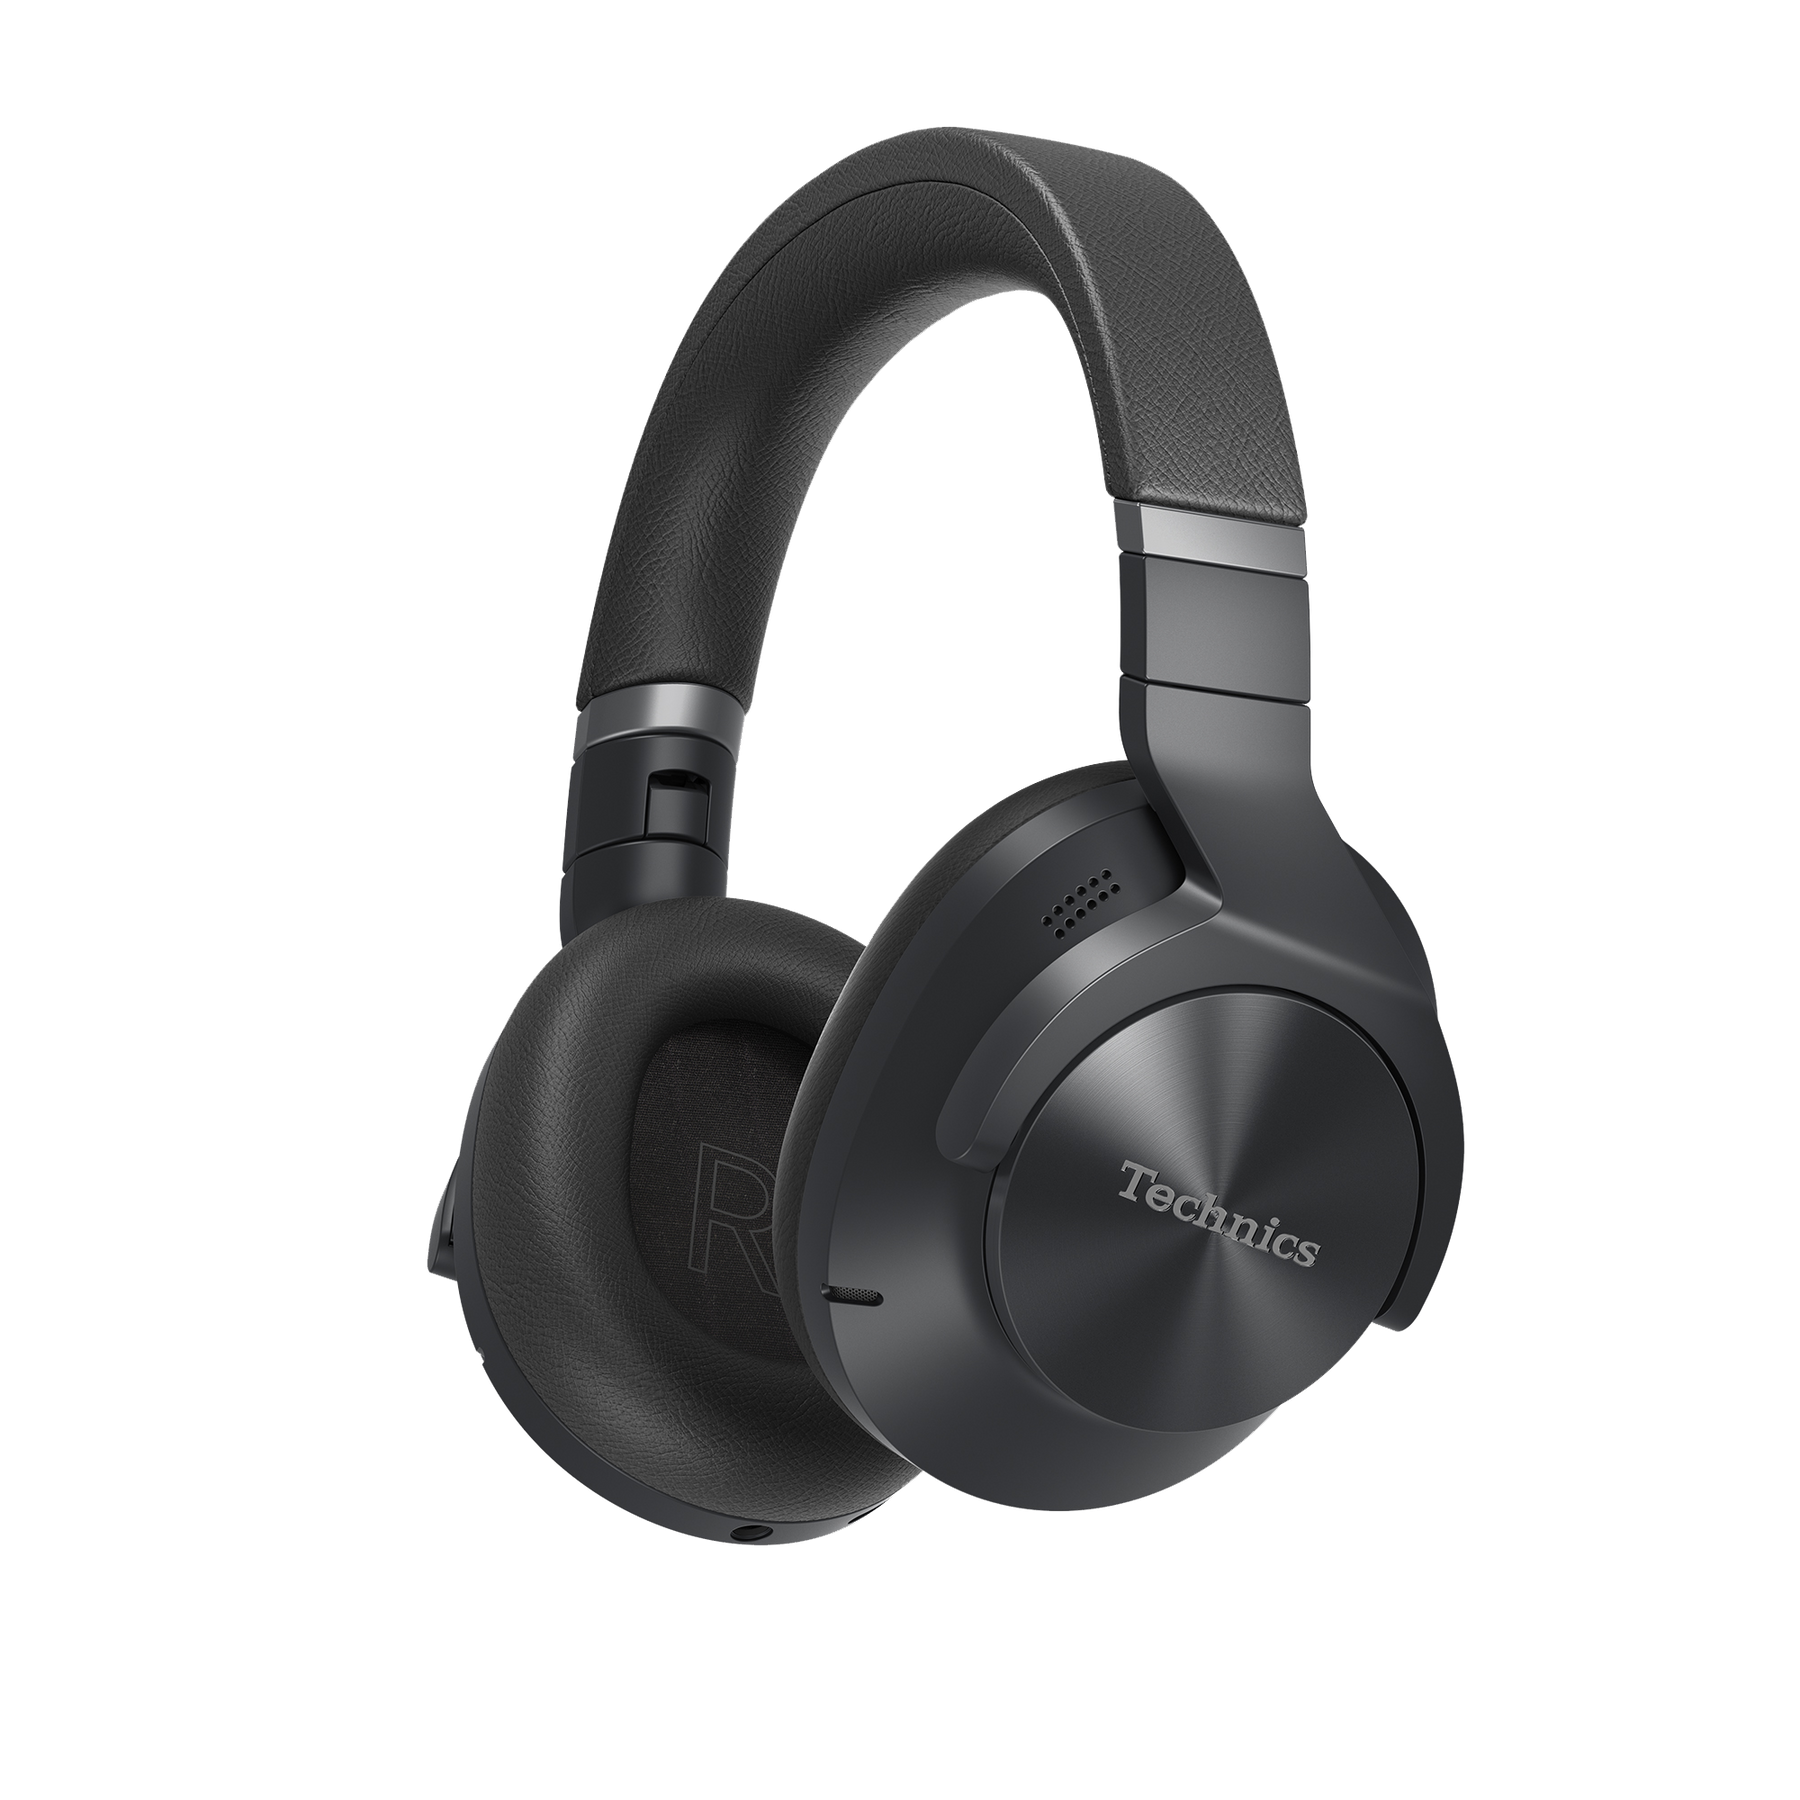 Noise Cancelling Over Ear Headphones EAH-A800